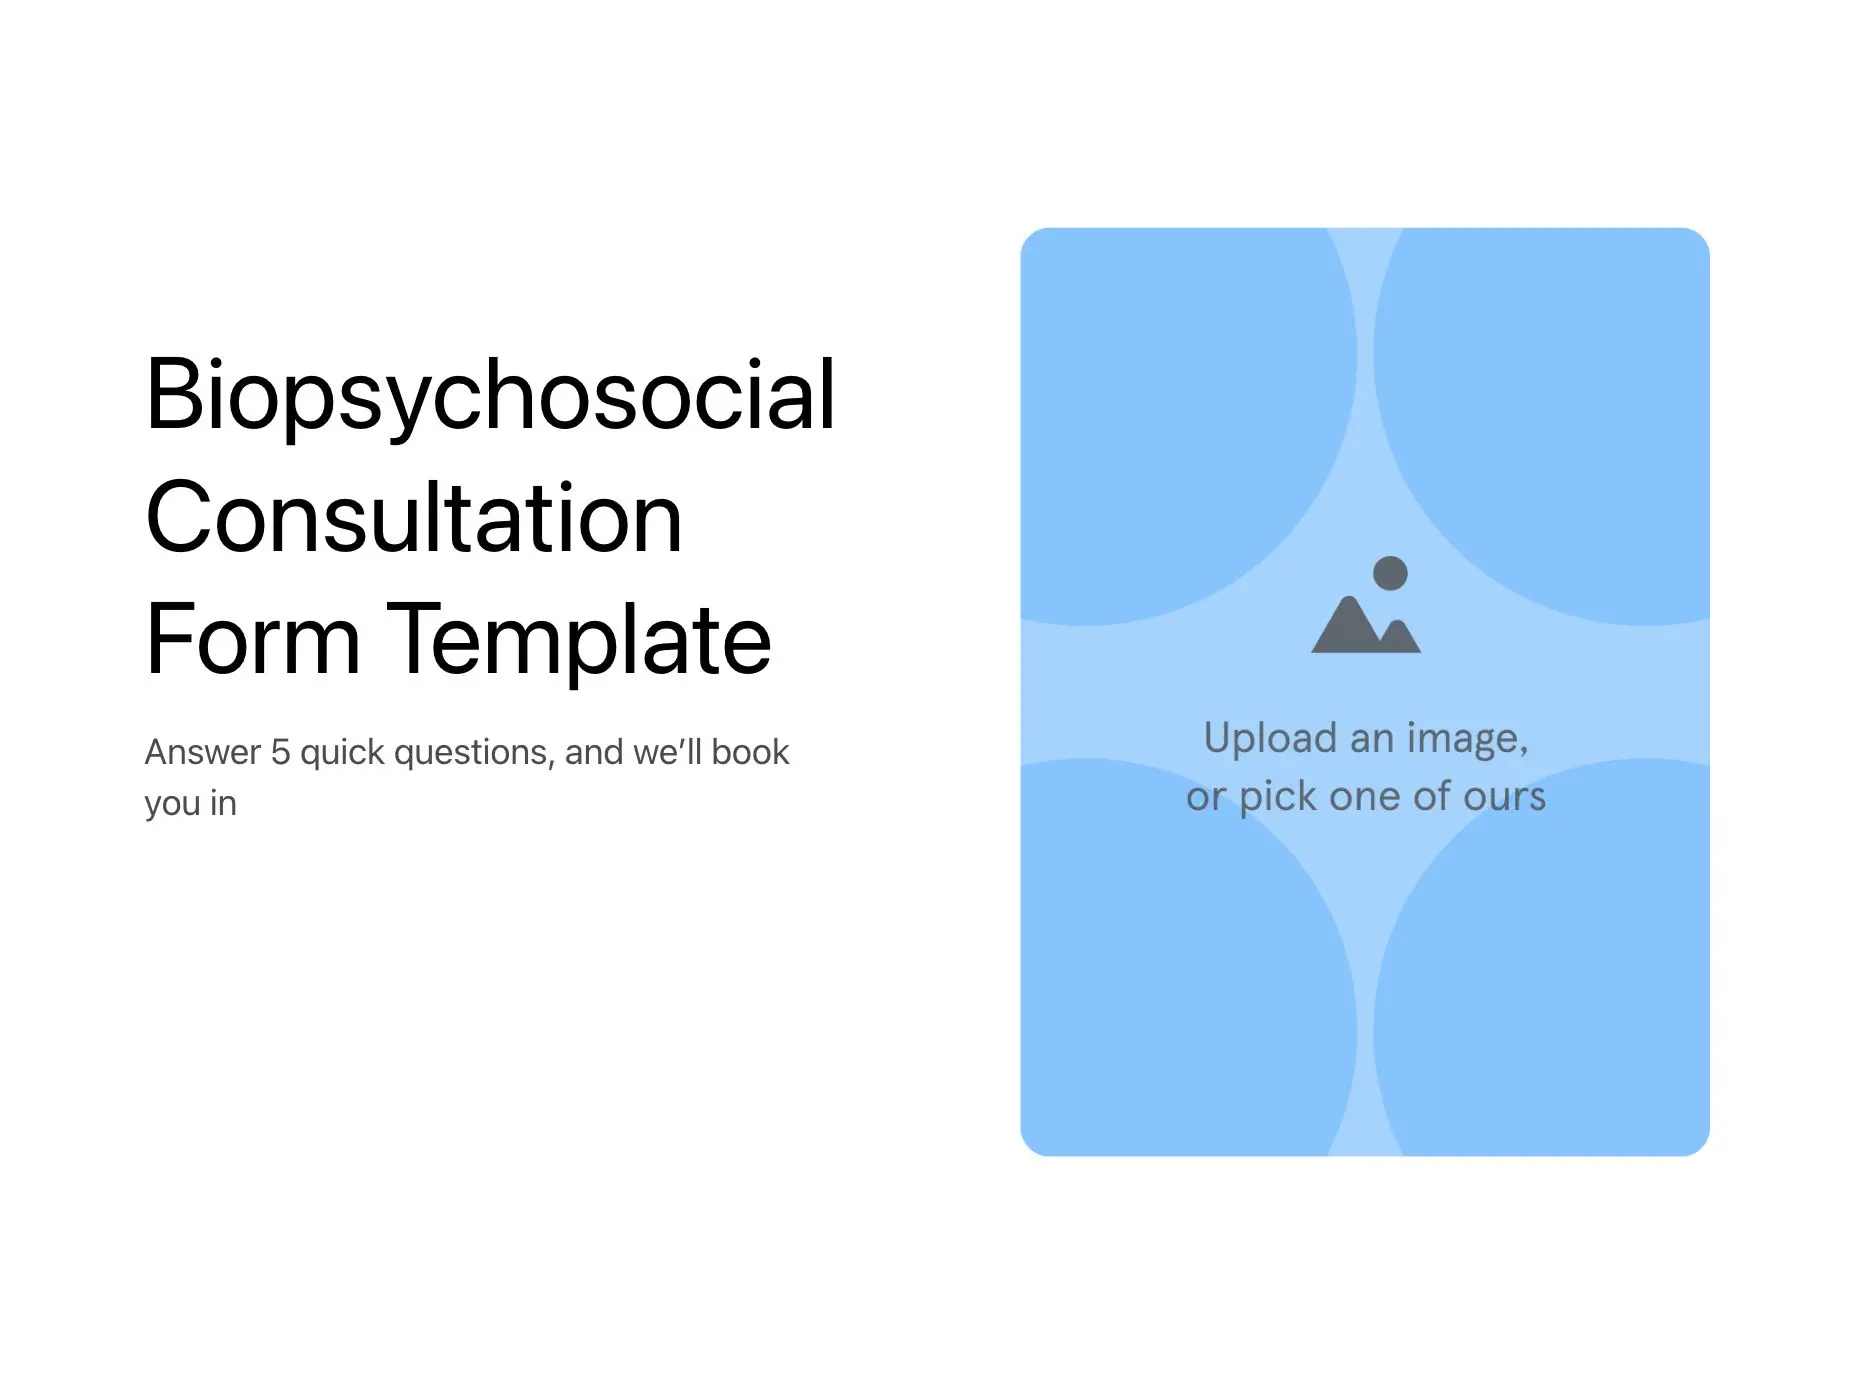 Biopsychosocial Consultation Form Template Hero